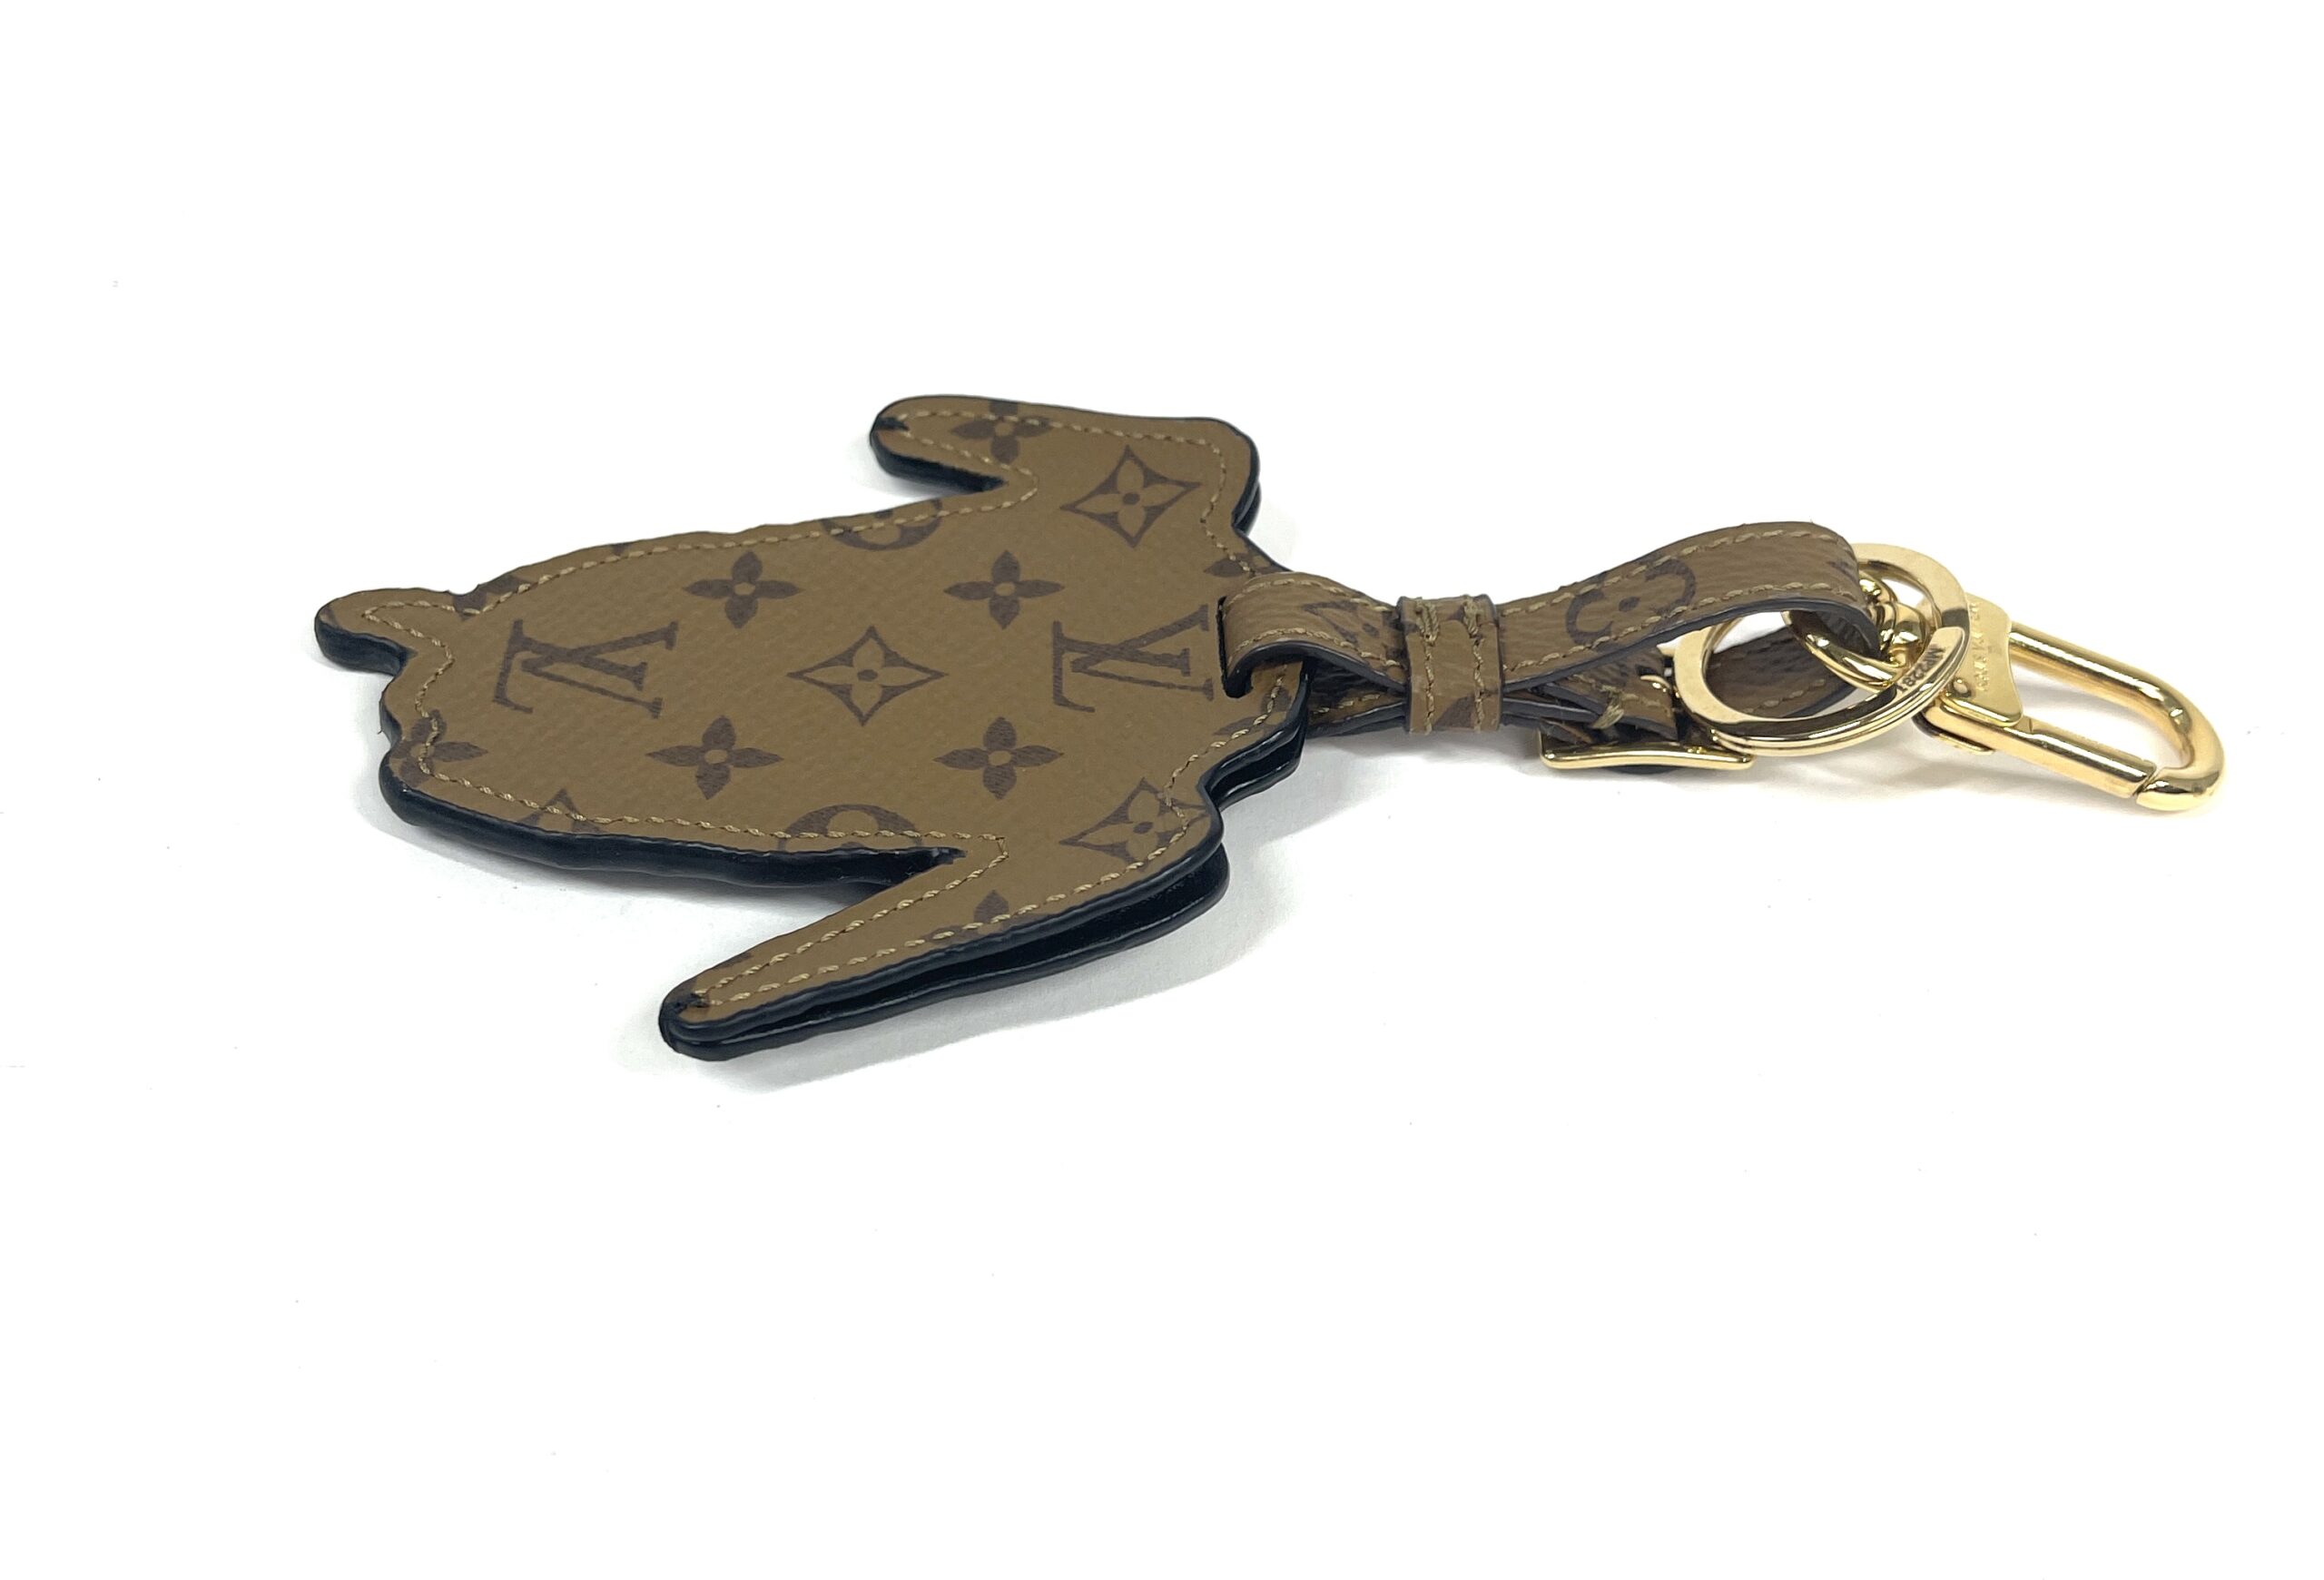 Louis Vuitton Monogram Puppy Bag Charm Key Holder